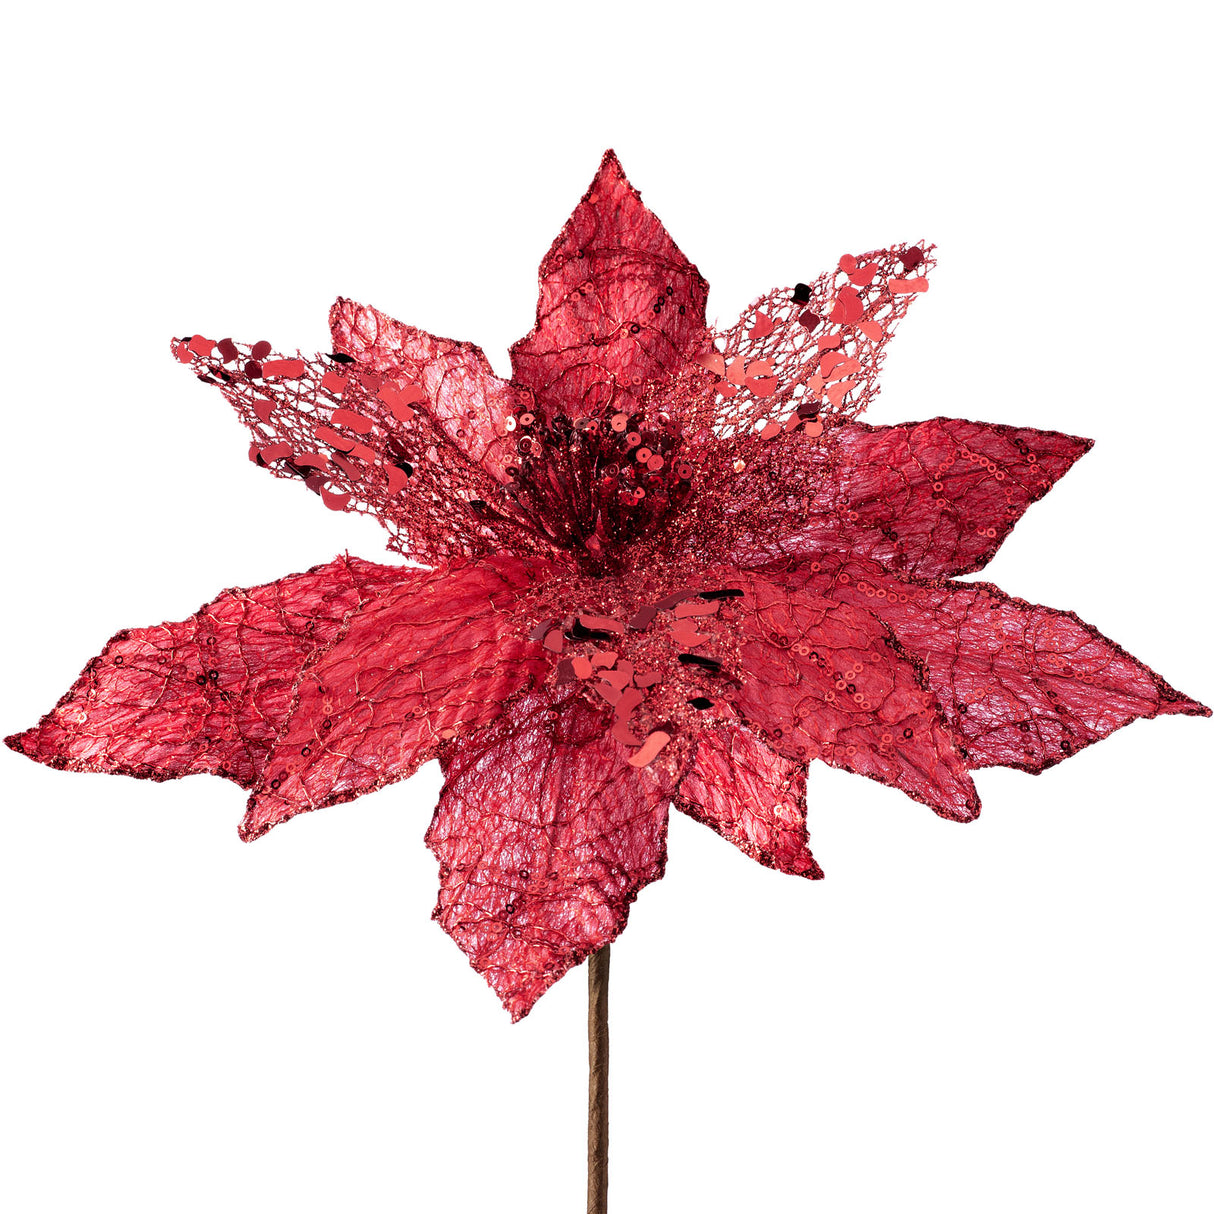 Artificial Poinsettia Flower, Red, 34 cm